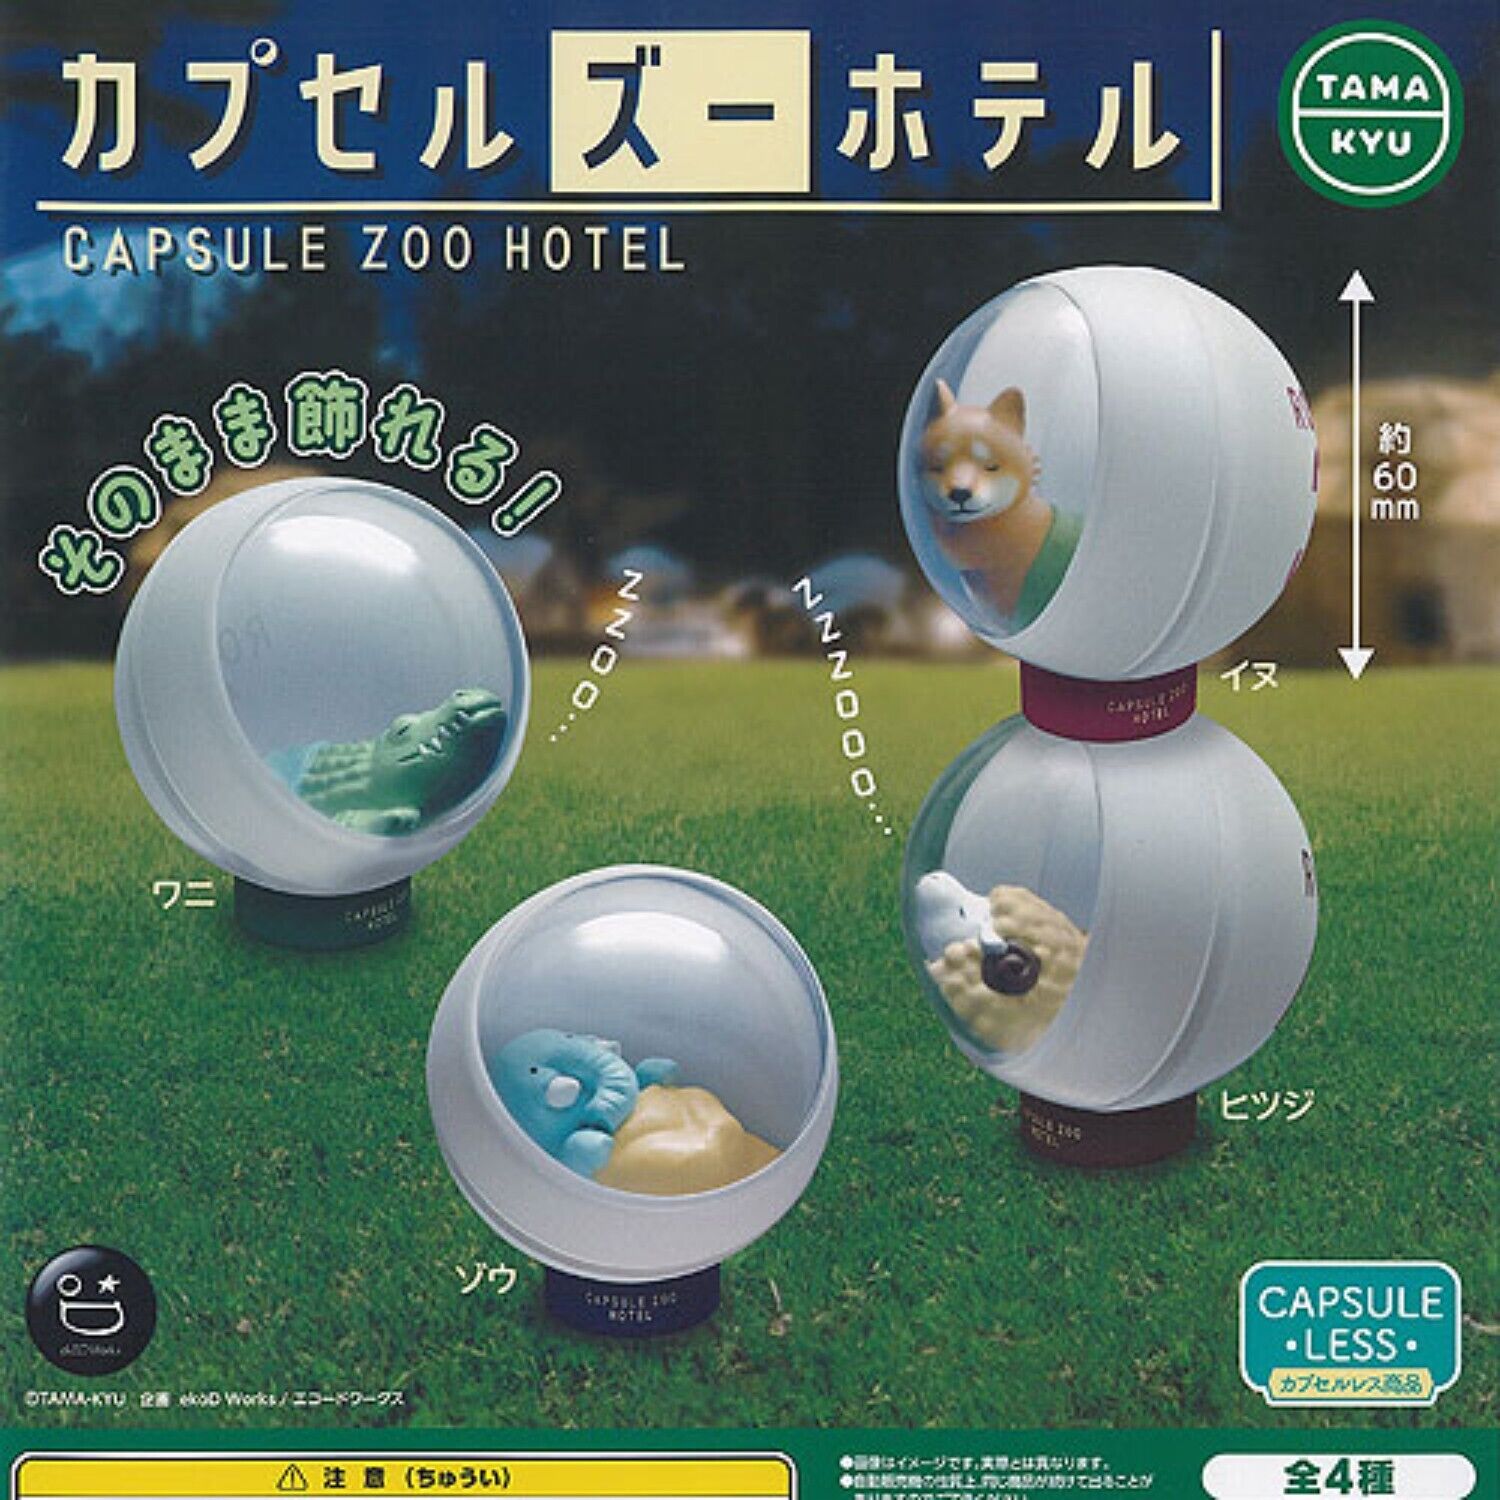 TAMA-KYU Capsule Zoo Hotel Mascot Capsule Toy 4 Types Full Comp Set Gacha New